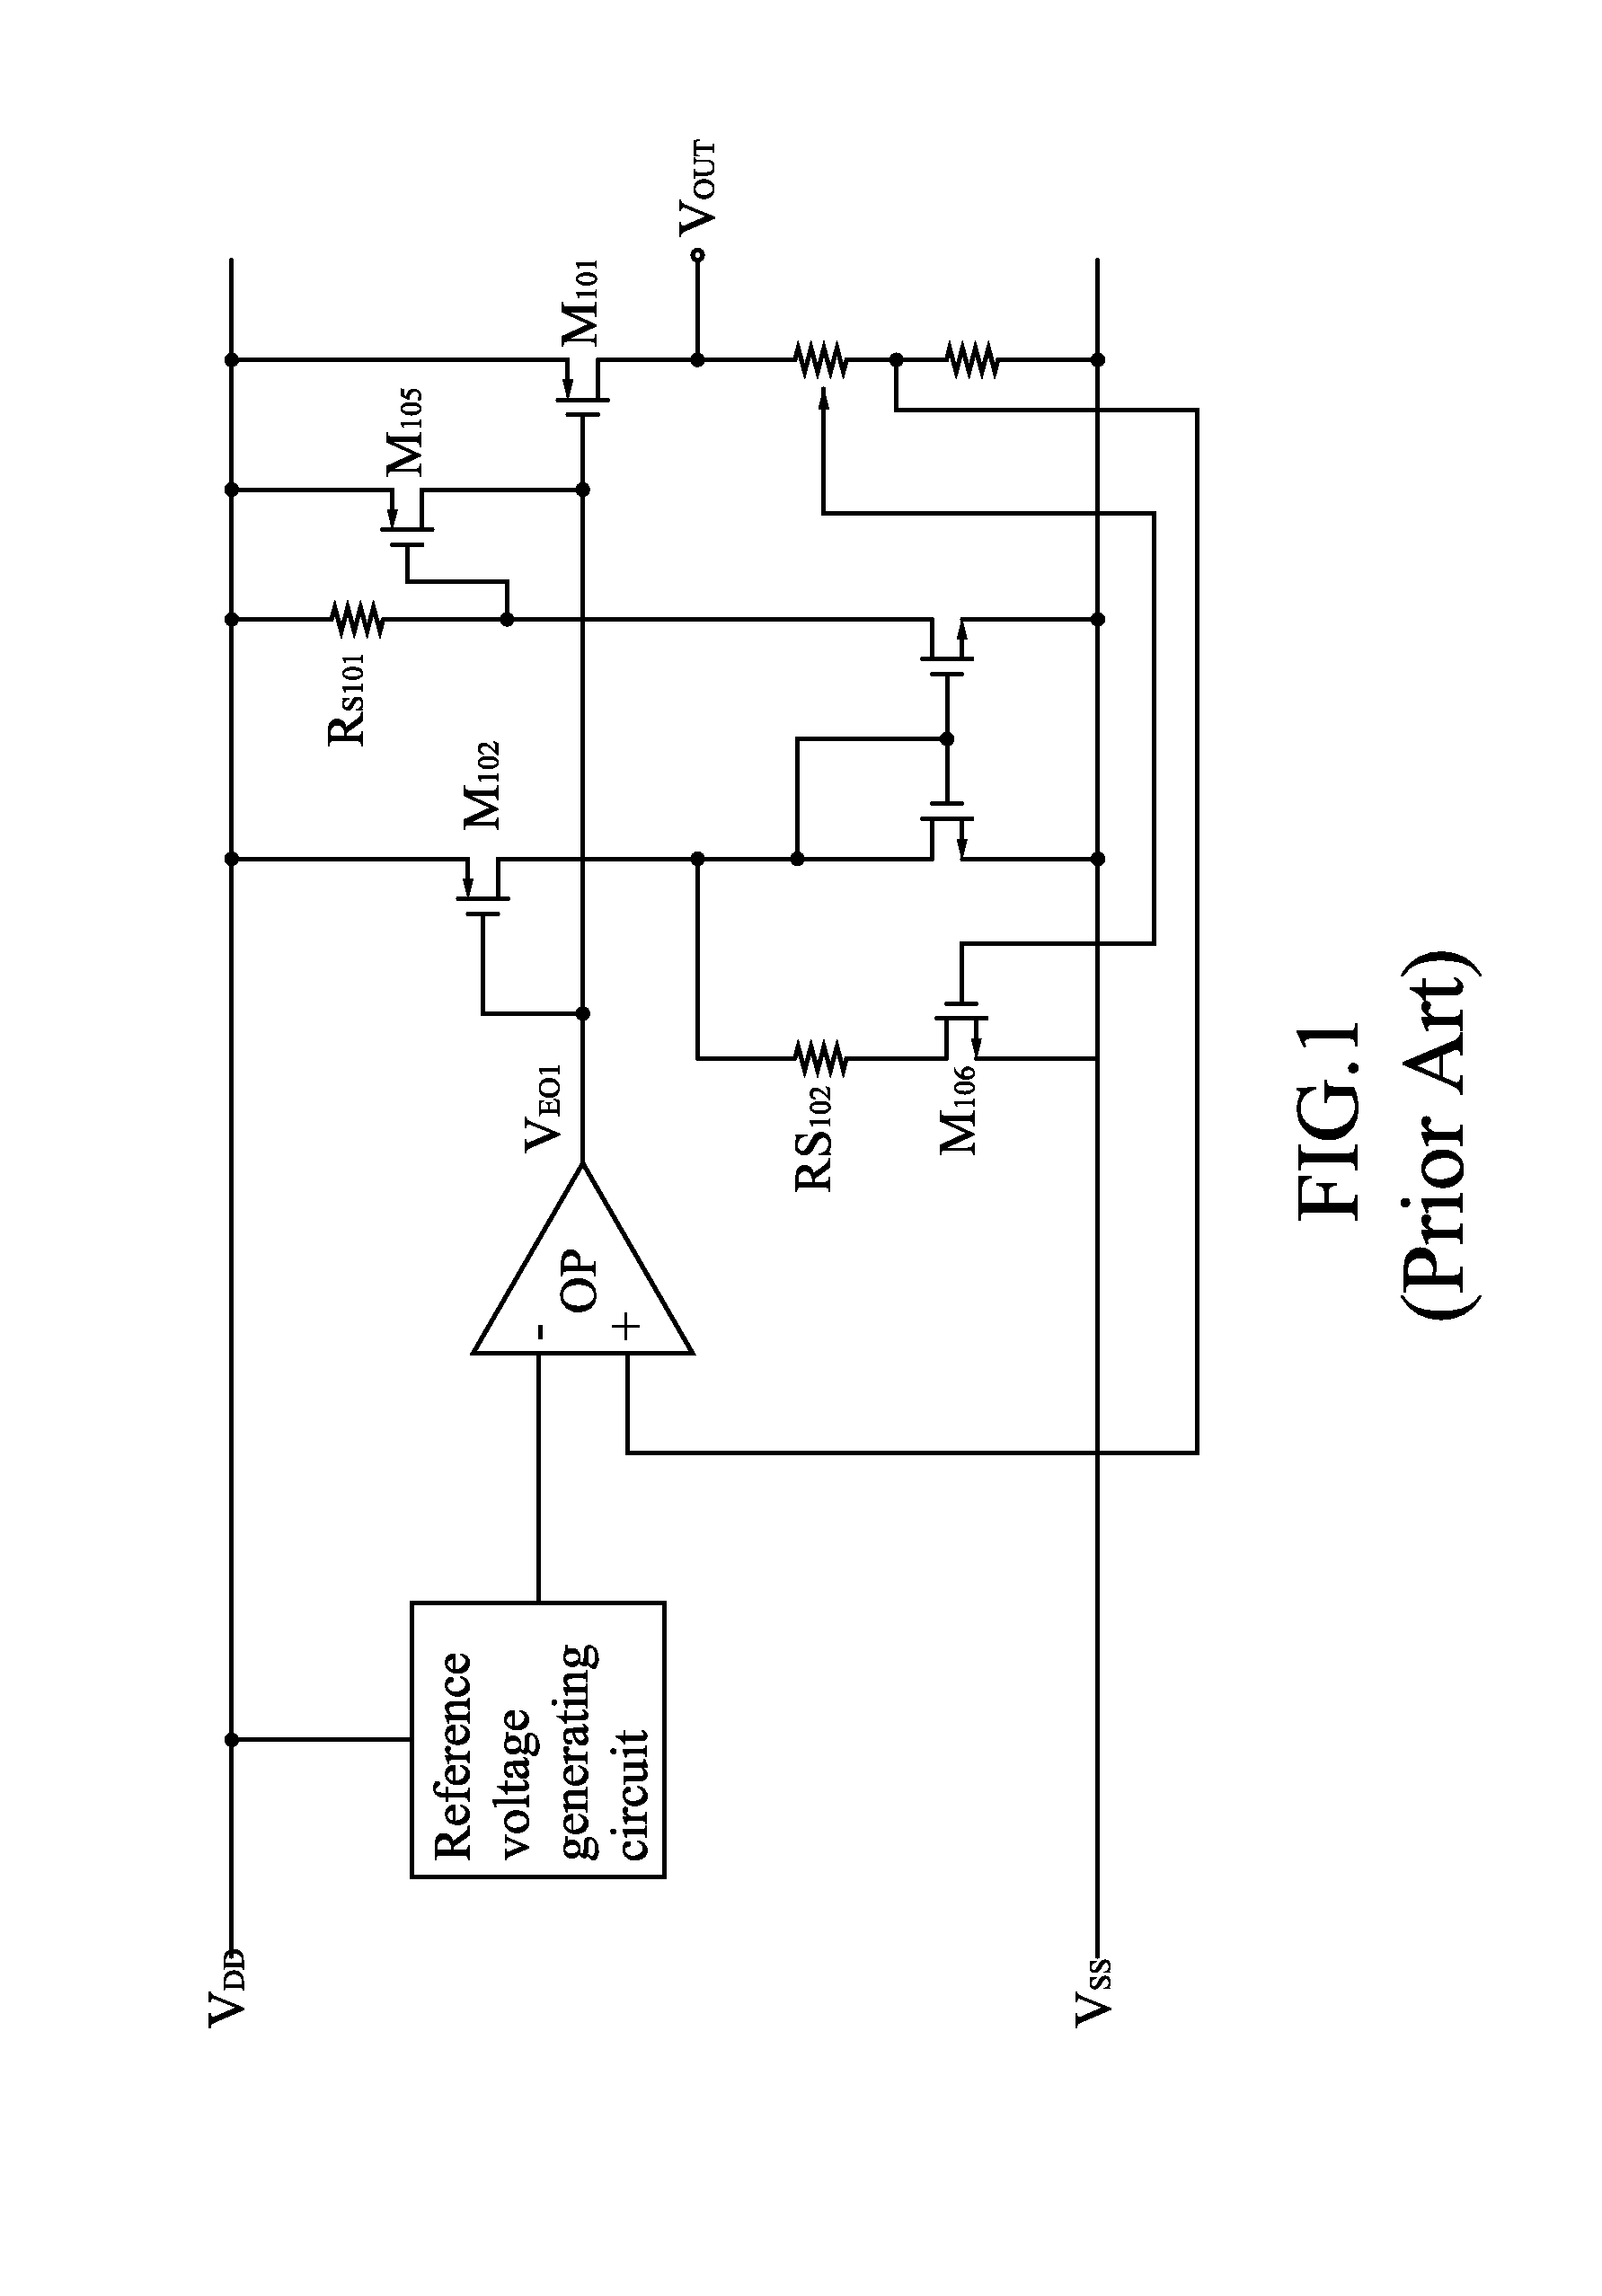 Voltage regulator having active foldback current limiting circuit